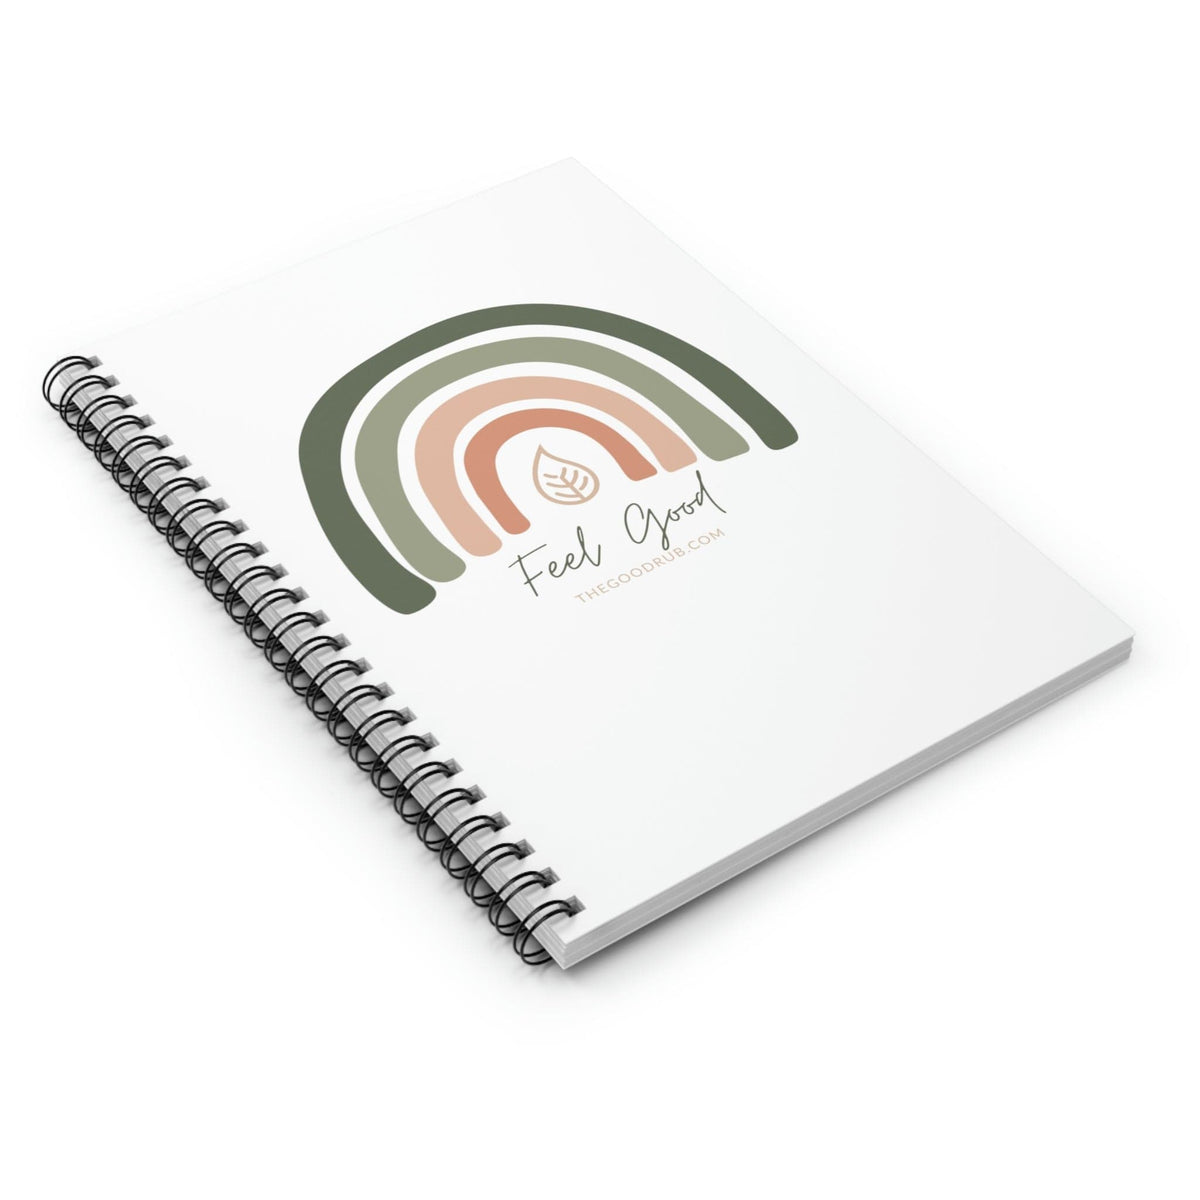 Feel Good Rainbow Spiral Notebook - Ruled Line - The Good Rub